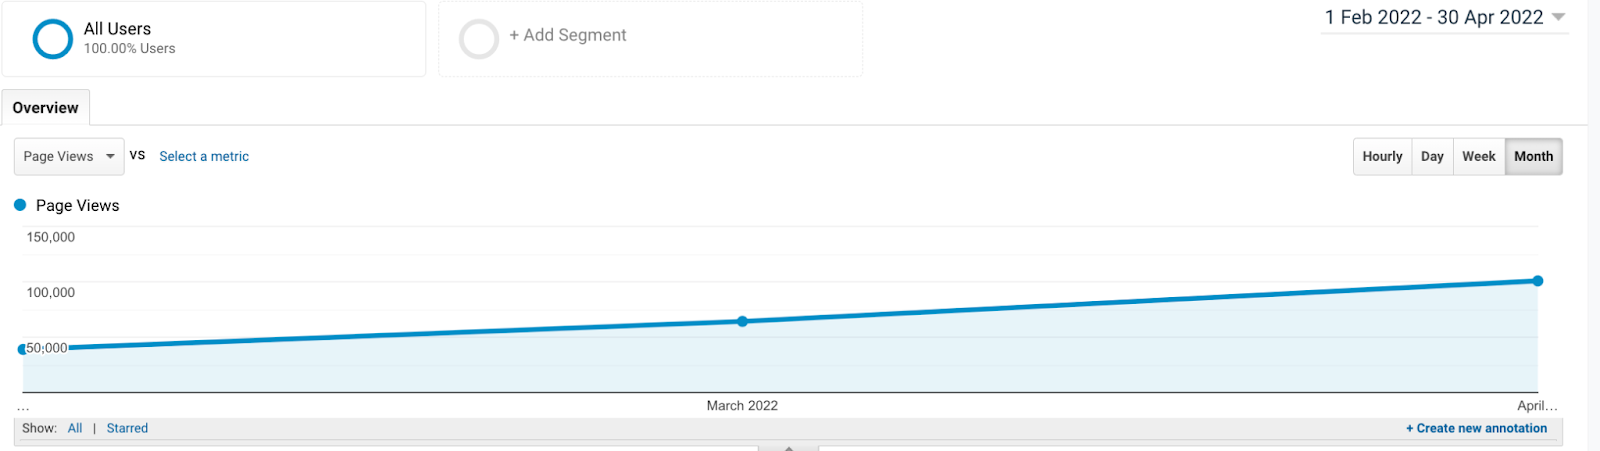 Screenshot showing statistics from Google Analytics for thetravelbunny.com